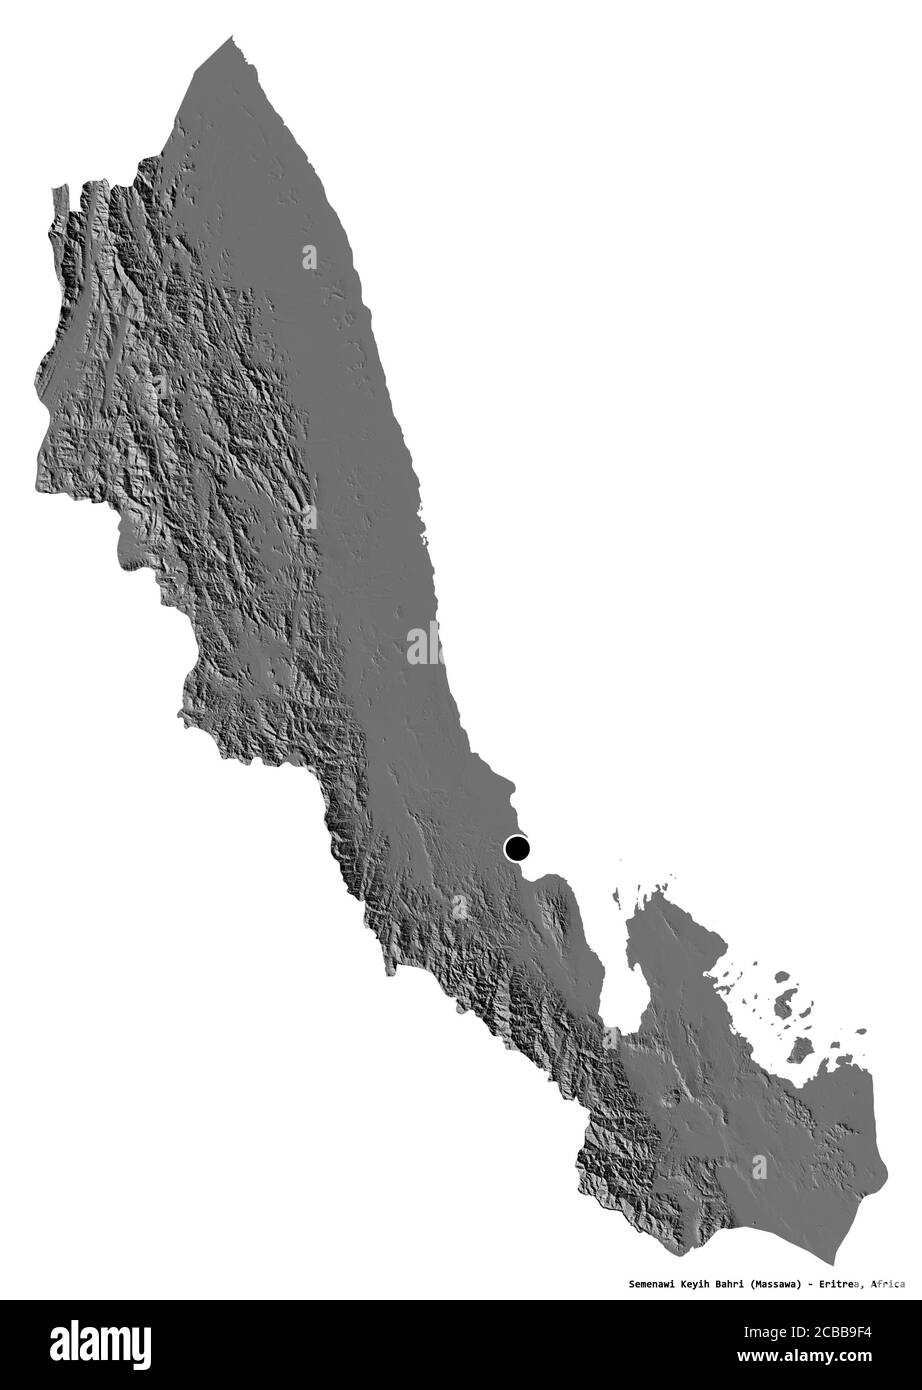 Shape of Semenawi Keyih Bahri, region of Eritrea, with its capital isolated on white background. Bilevel elevation map. 3D rendering Stock Photo